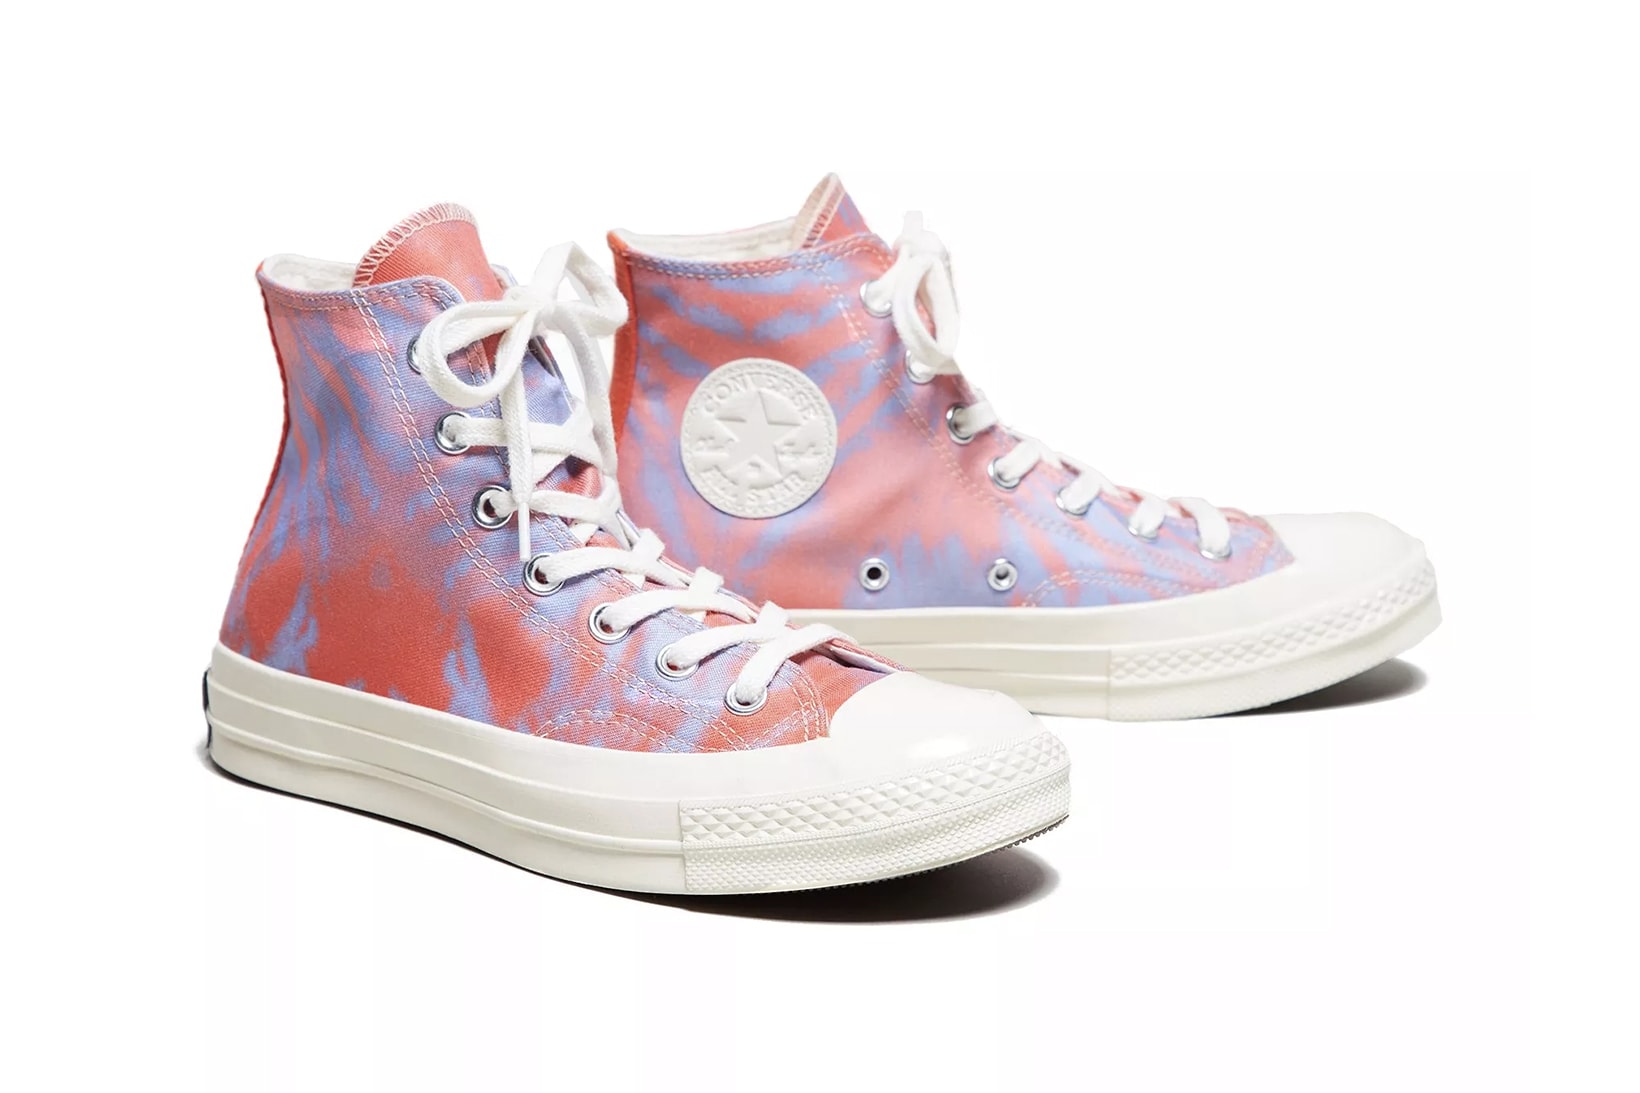 Converse All Star Low Top Canvas Sneaker Paint Splatter Neon Pink Women's  sz 7